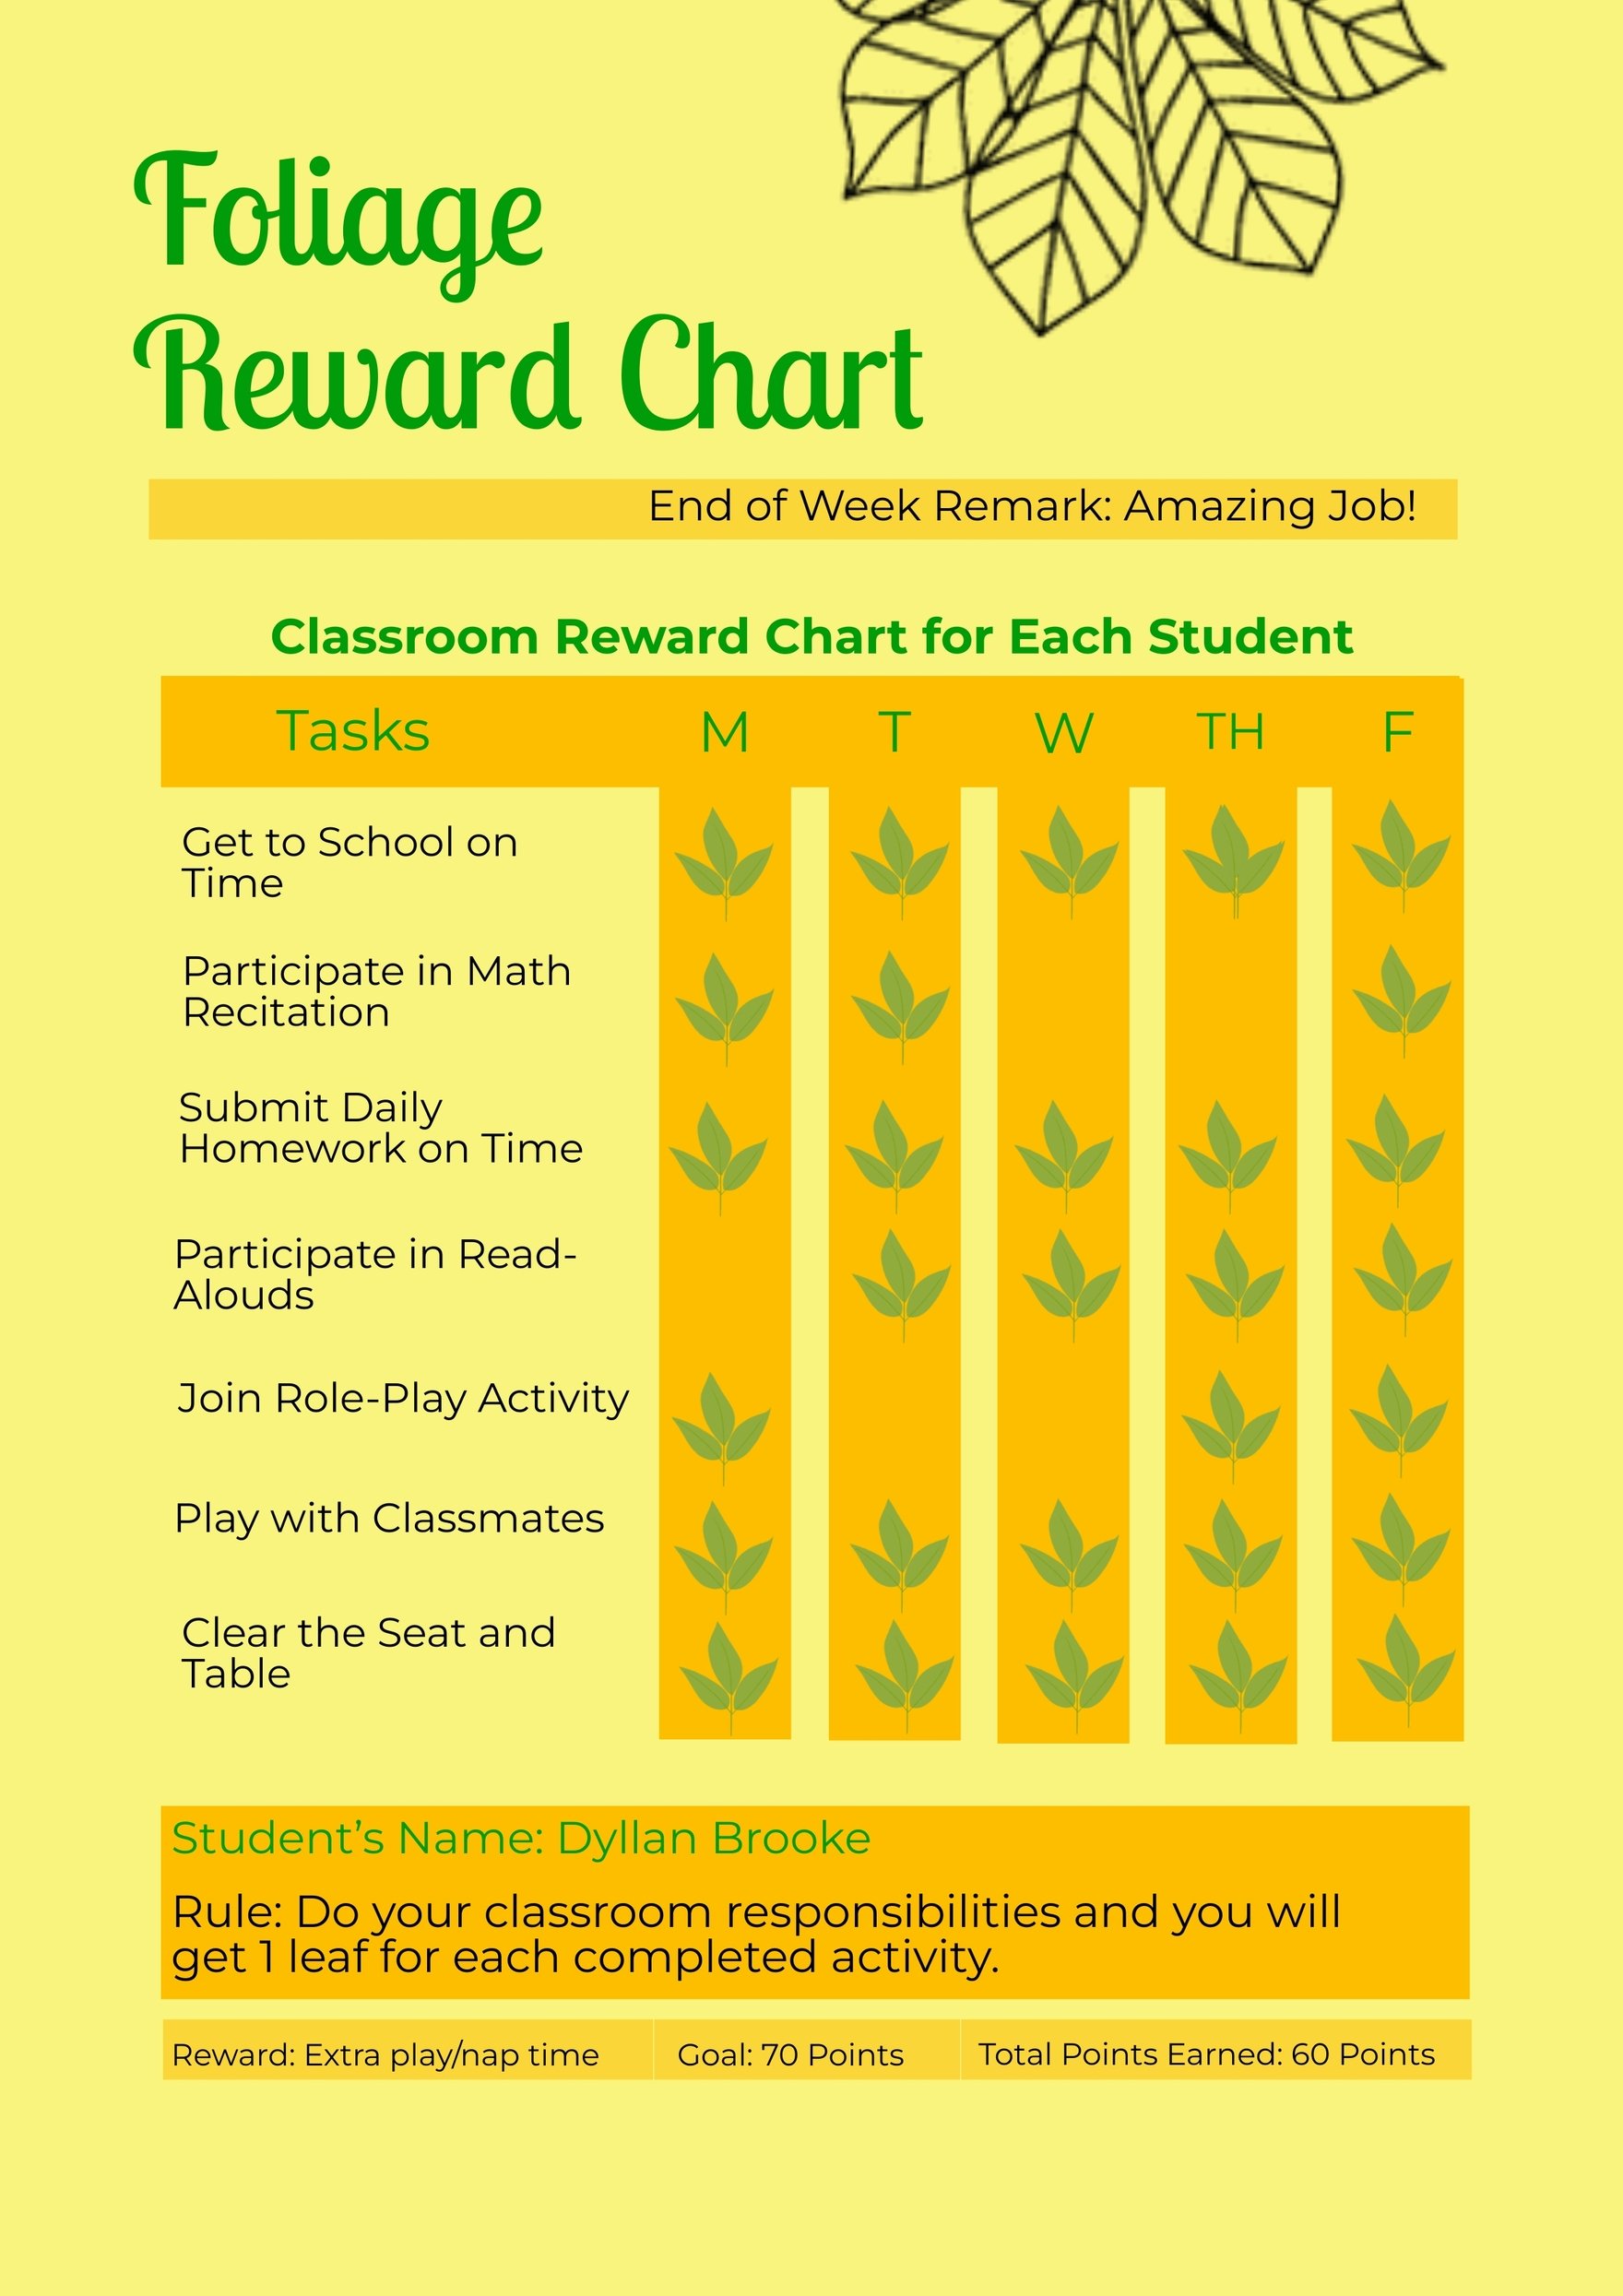 Foliage Reward Chart in PDF, Illustrator